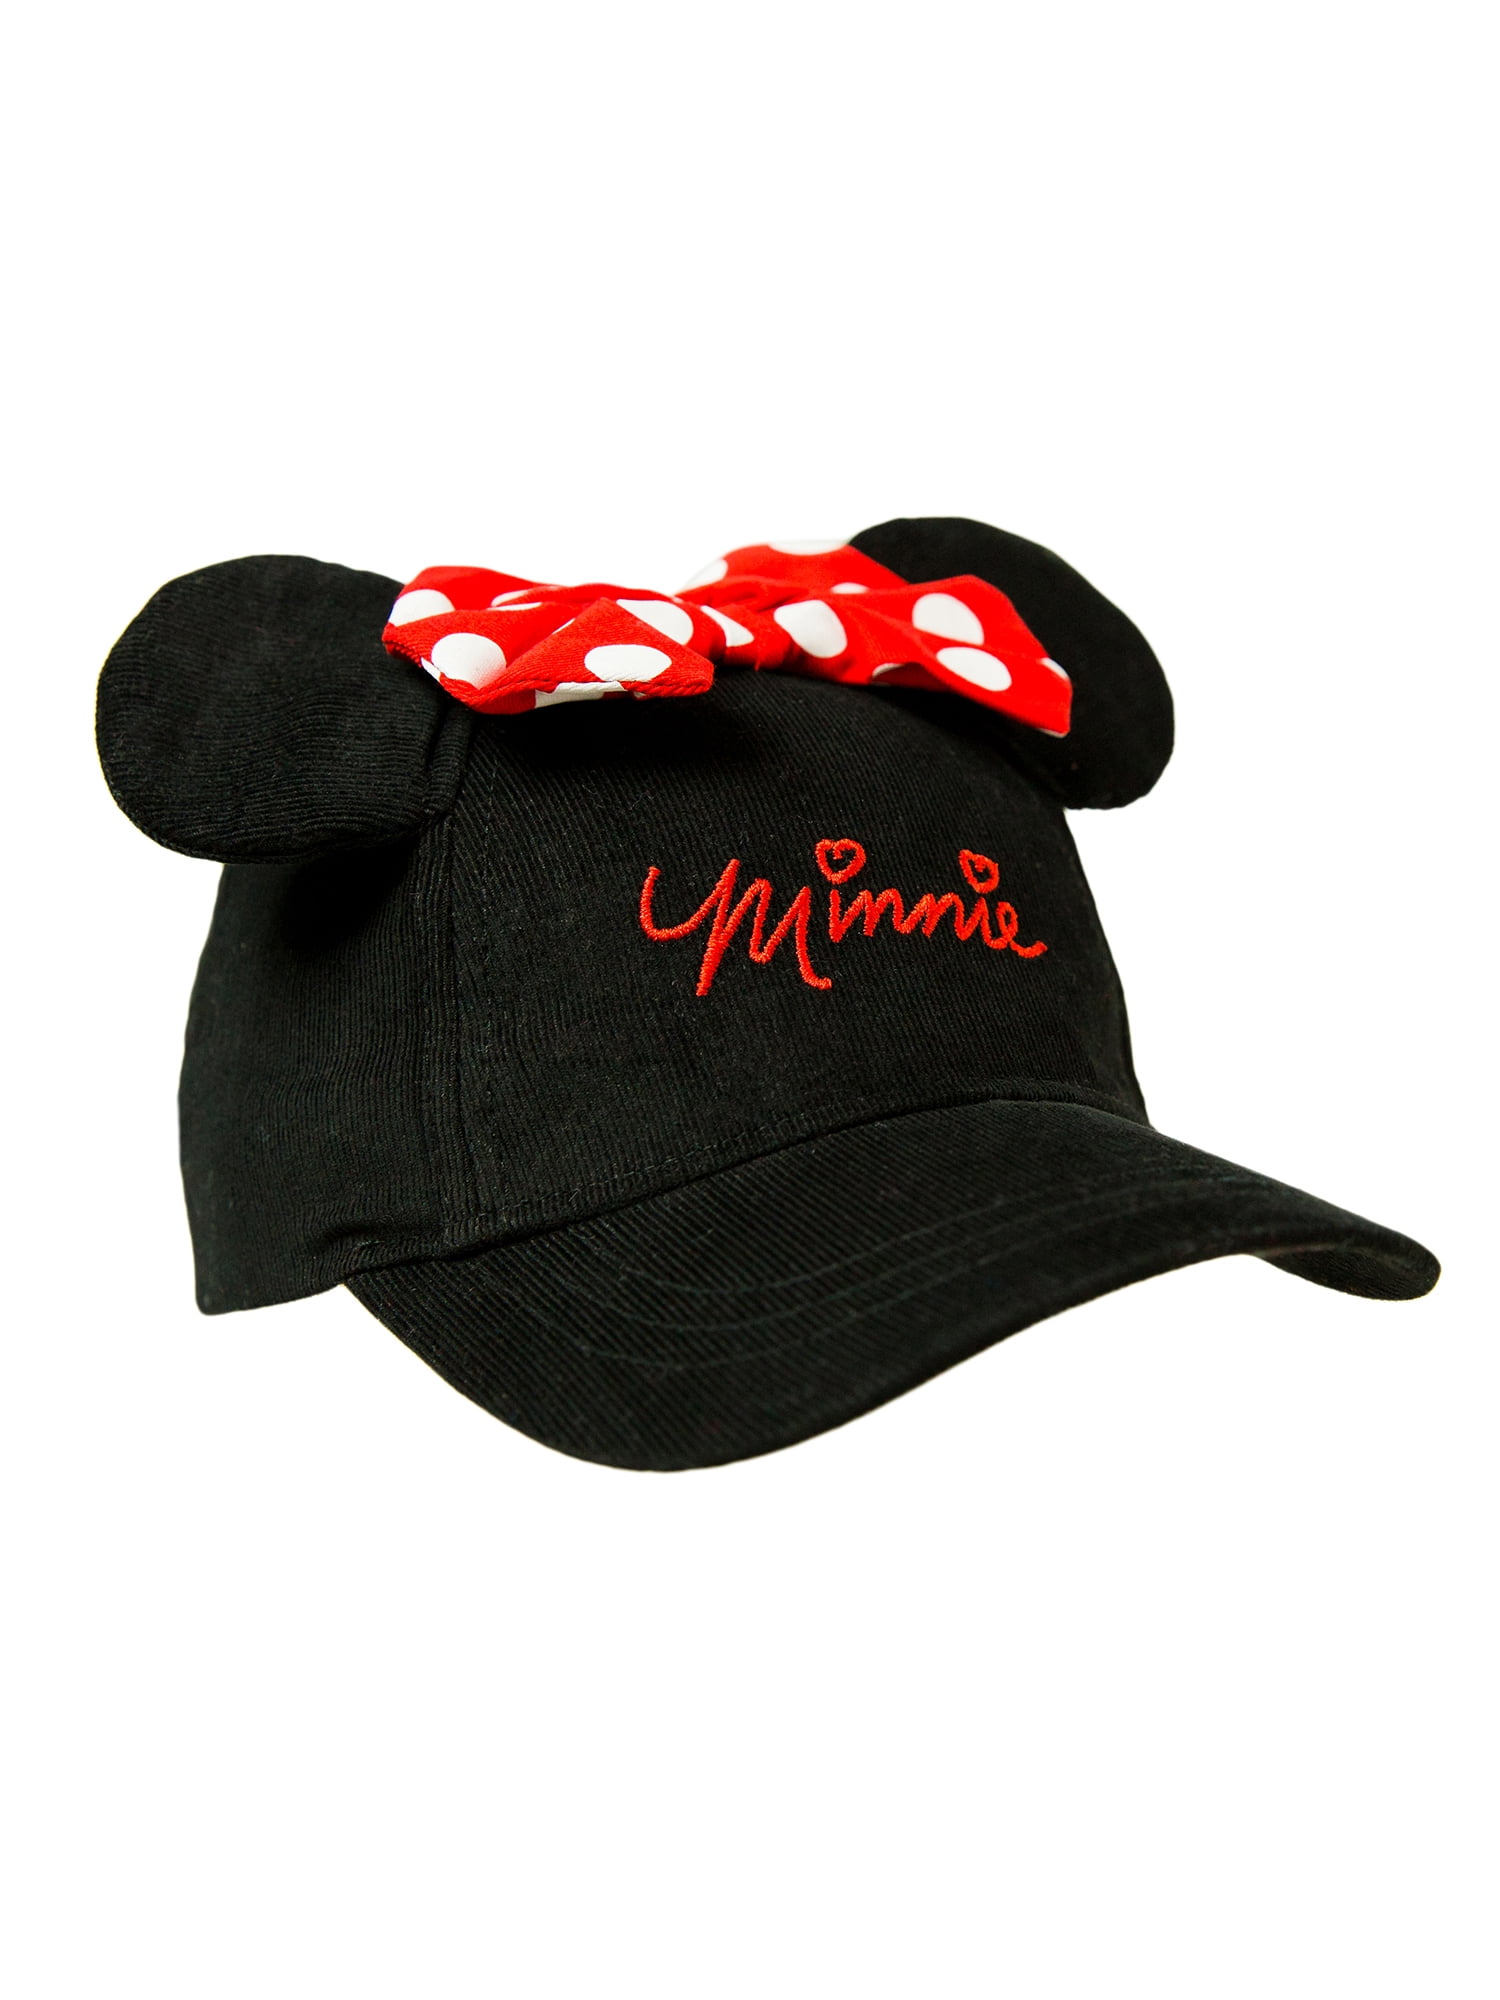 Disney  Baby Girls Minnie Mouse Hat